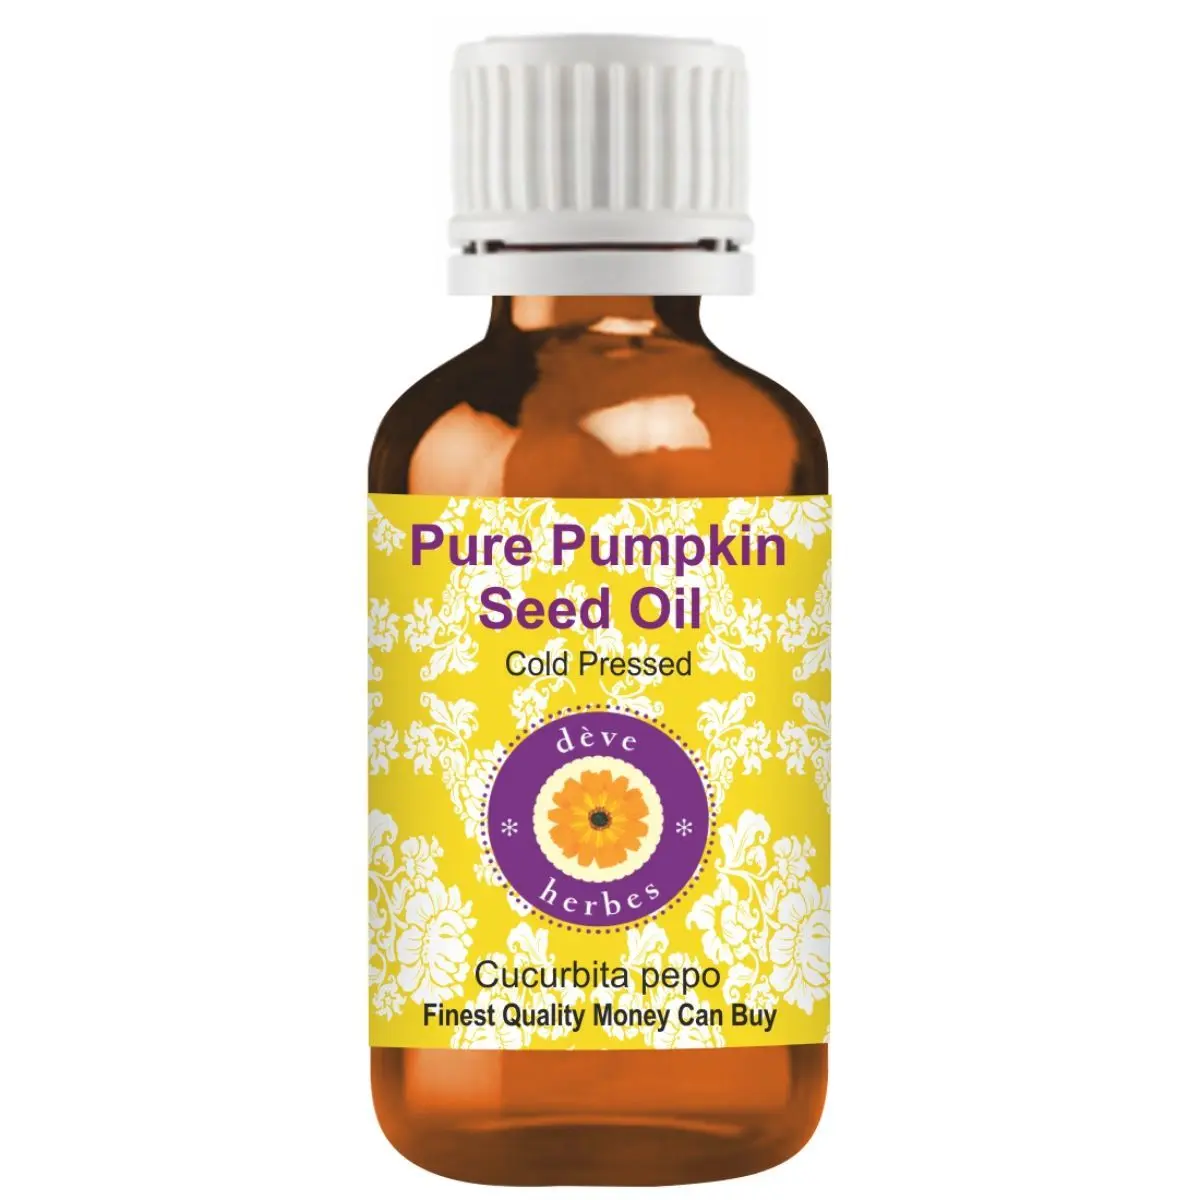 Deve Herbes Pure Pumpkin Seed Oil (Cucurbita pepo) Natural Therapeutic Grade Cold Pressed 10ml